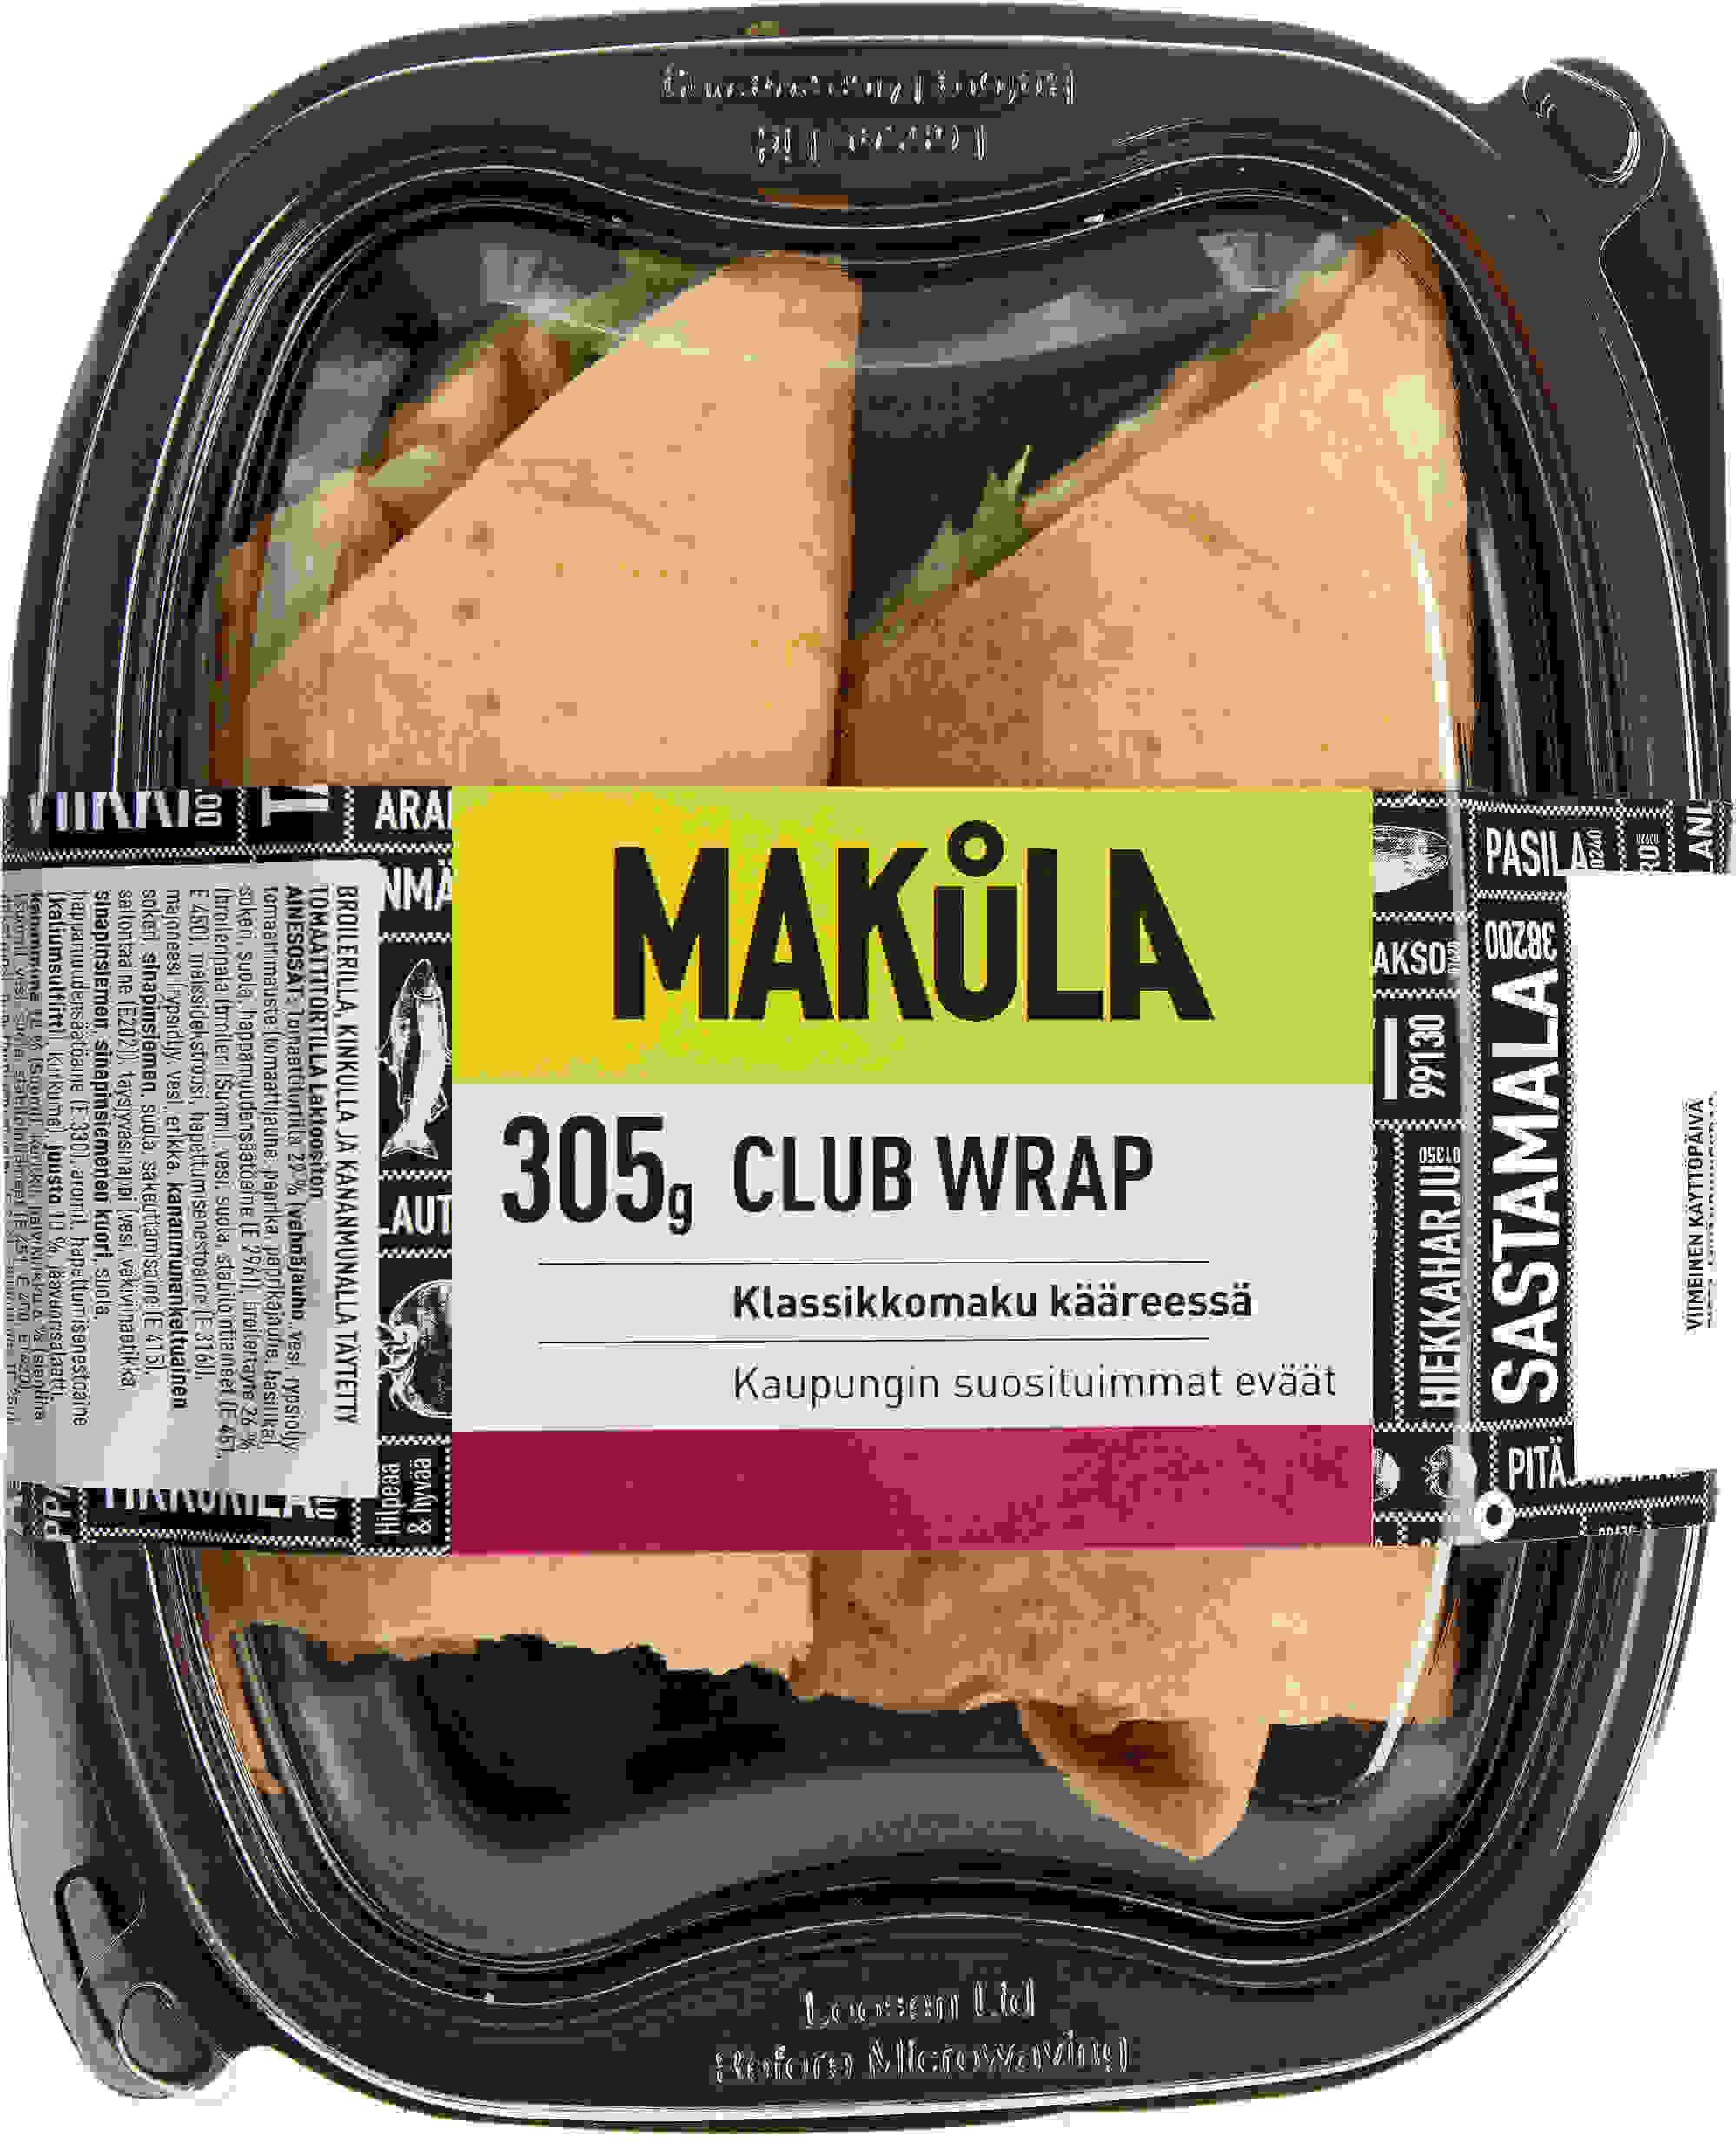 Makula Club Wrap